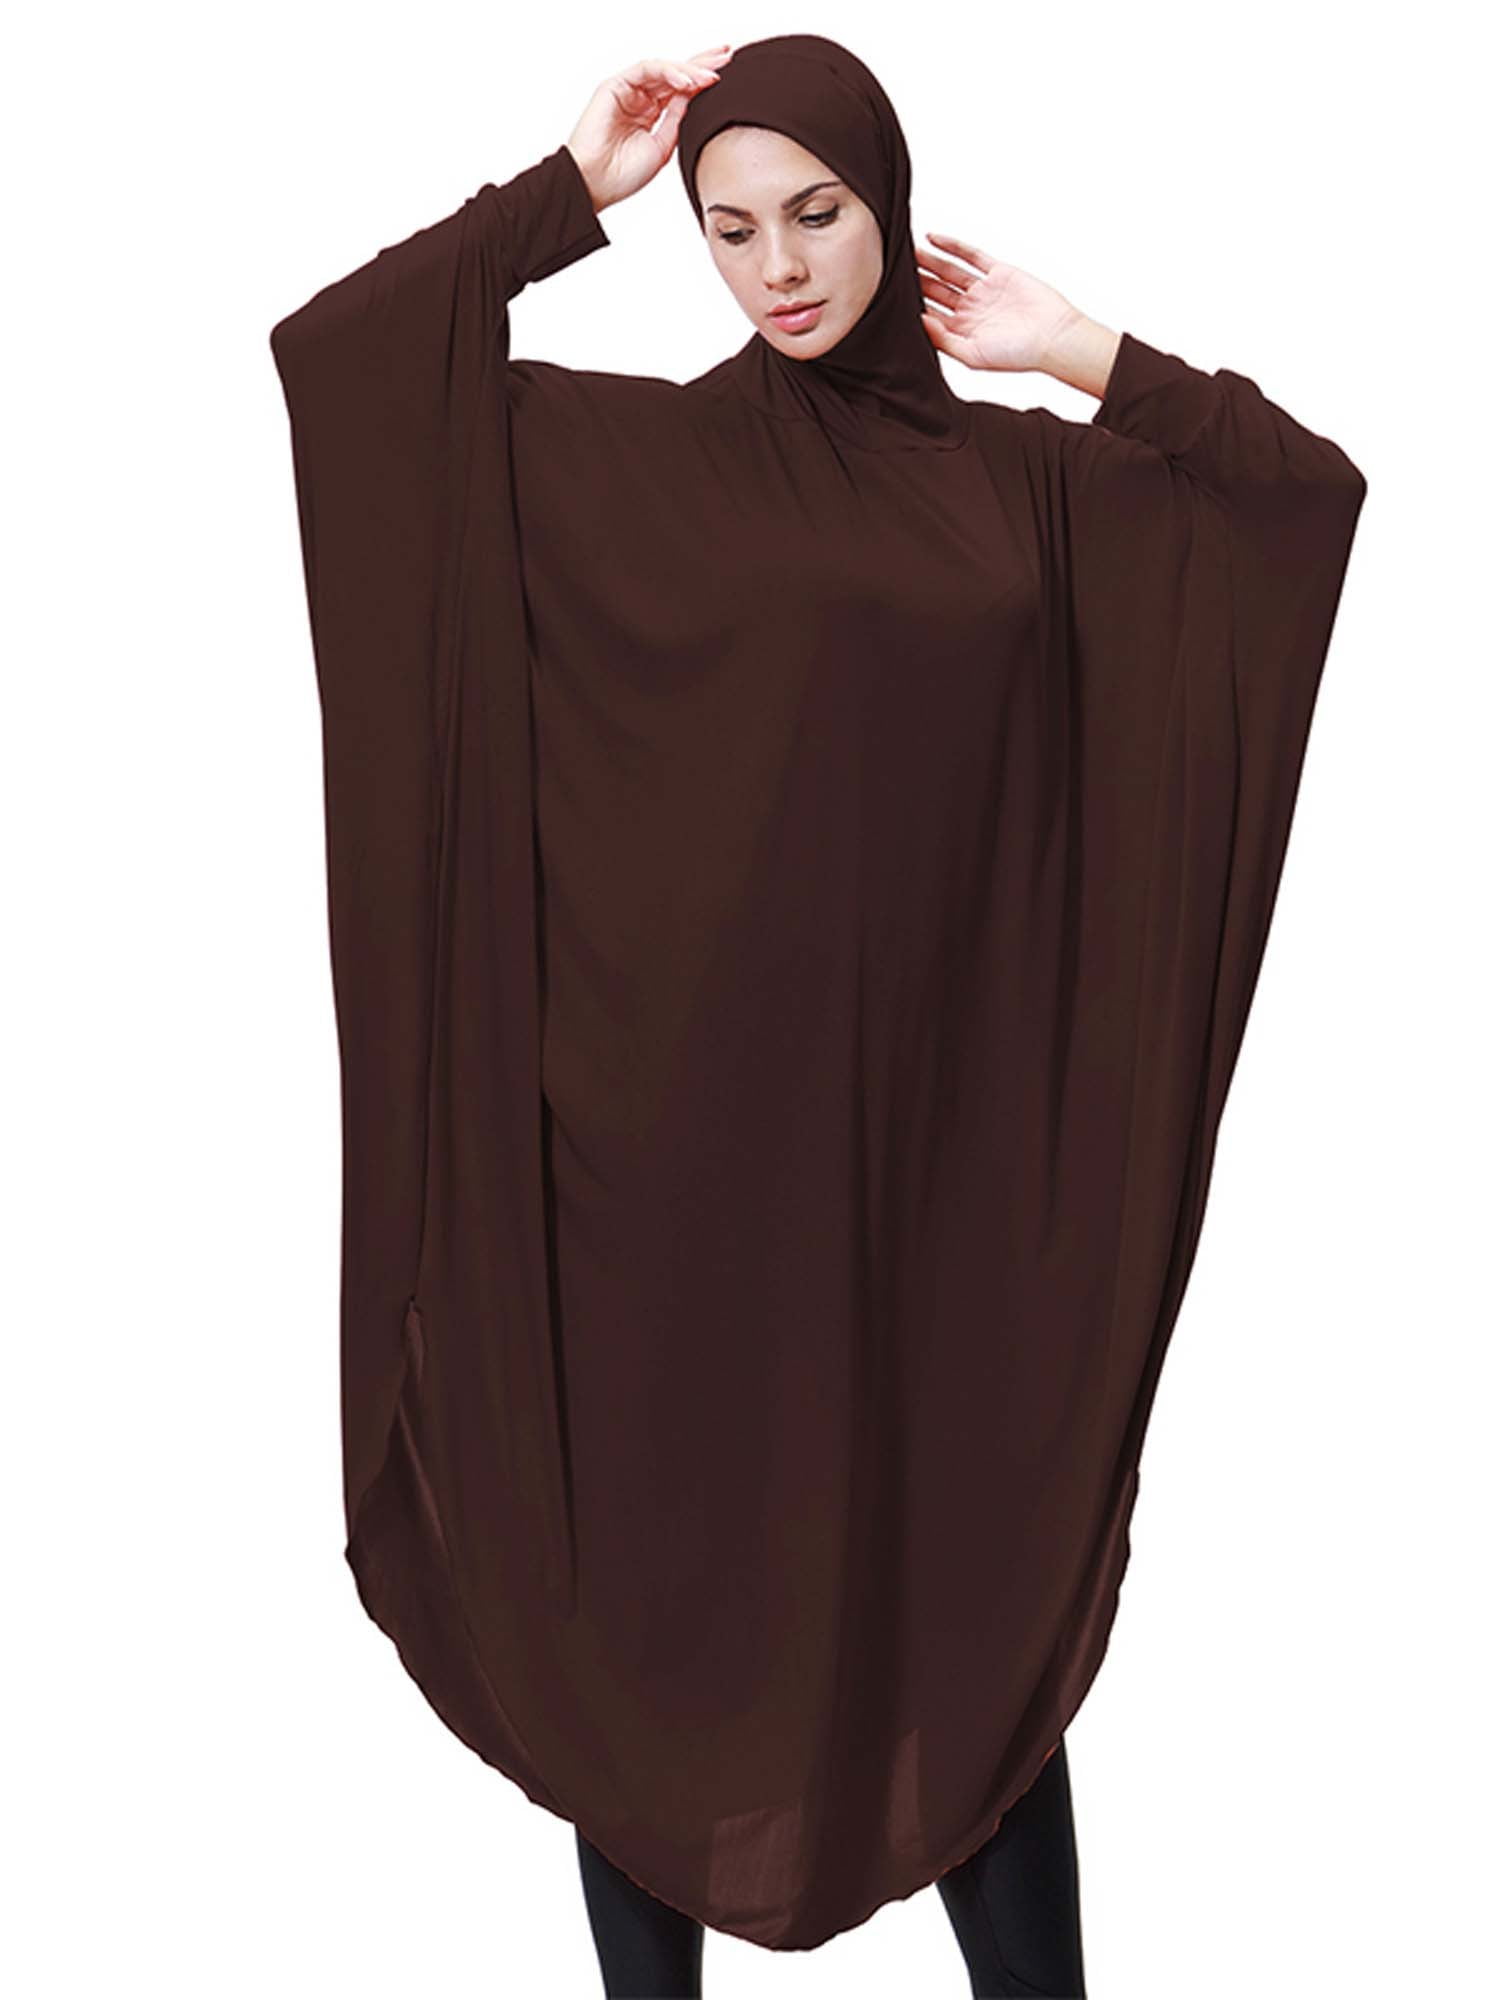 Details about   Muslim Women Prayer Robe Overhead Long Scarf Hijab Dress Kaftan Jilbab Islamic 